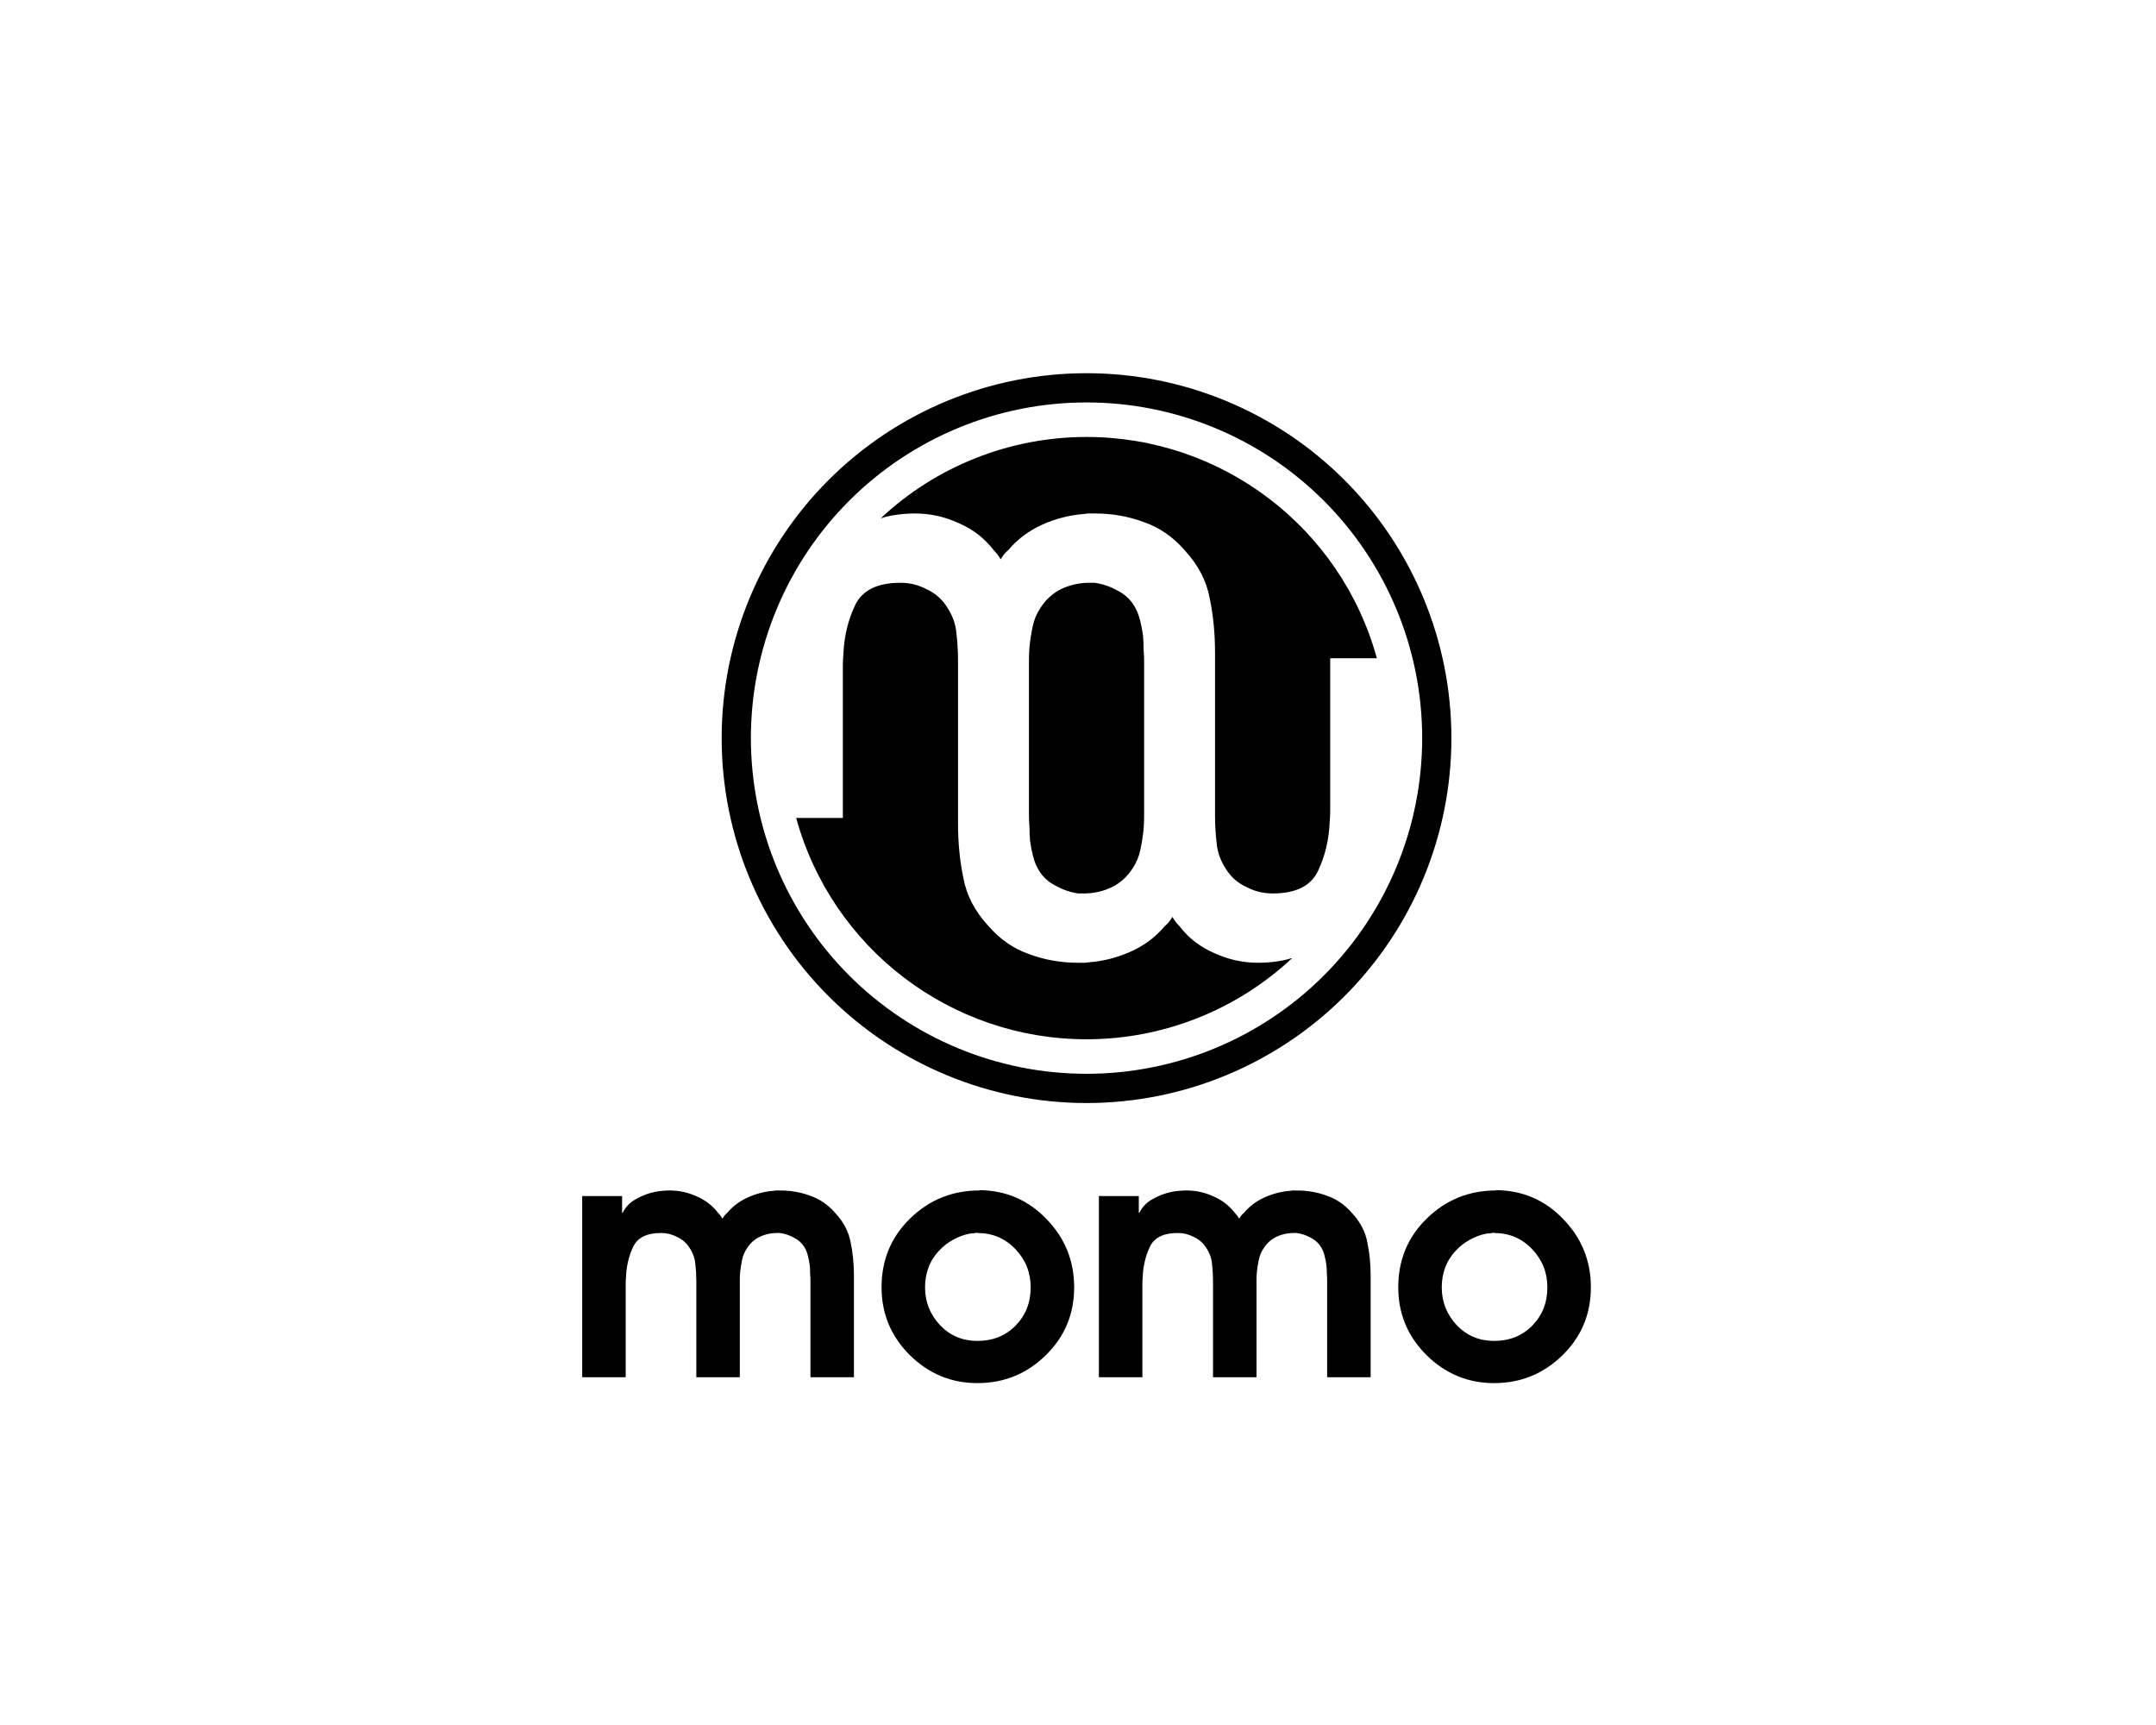 Momo new logo 21-0215 - The Sorting Table